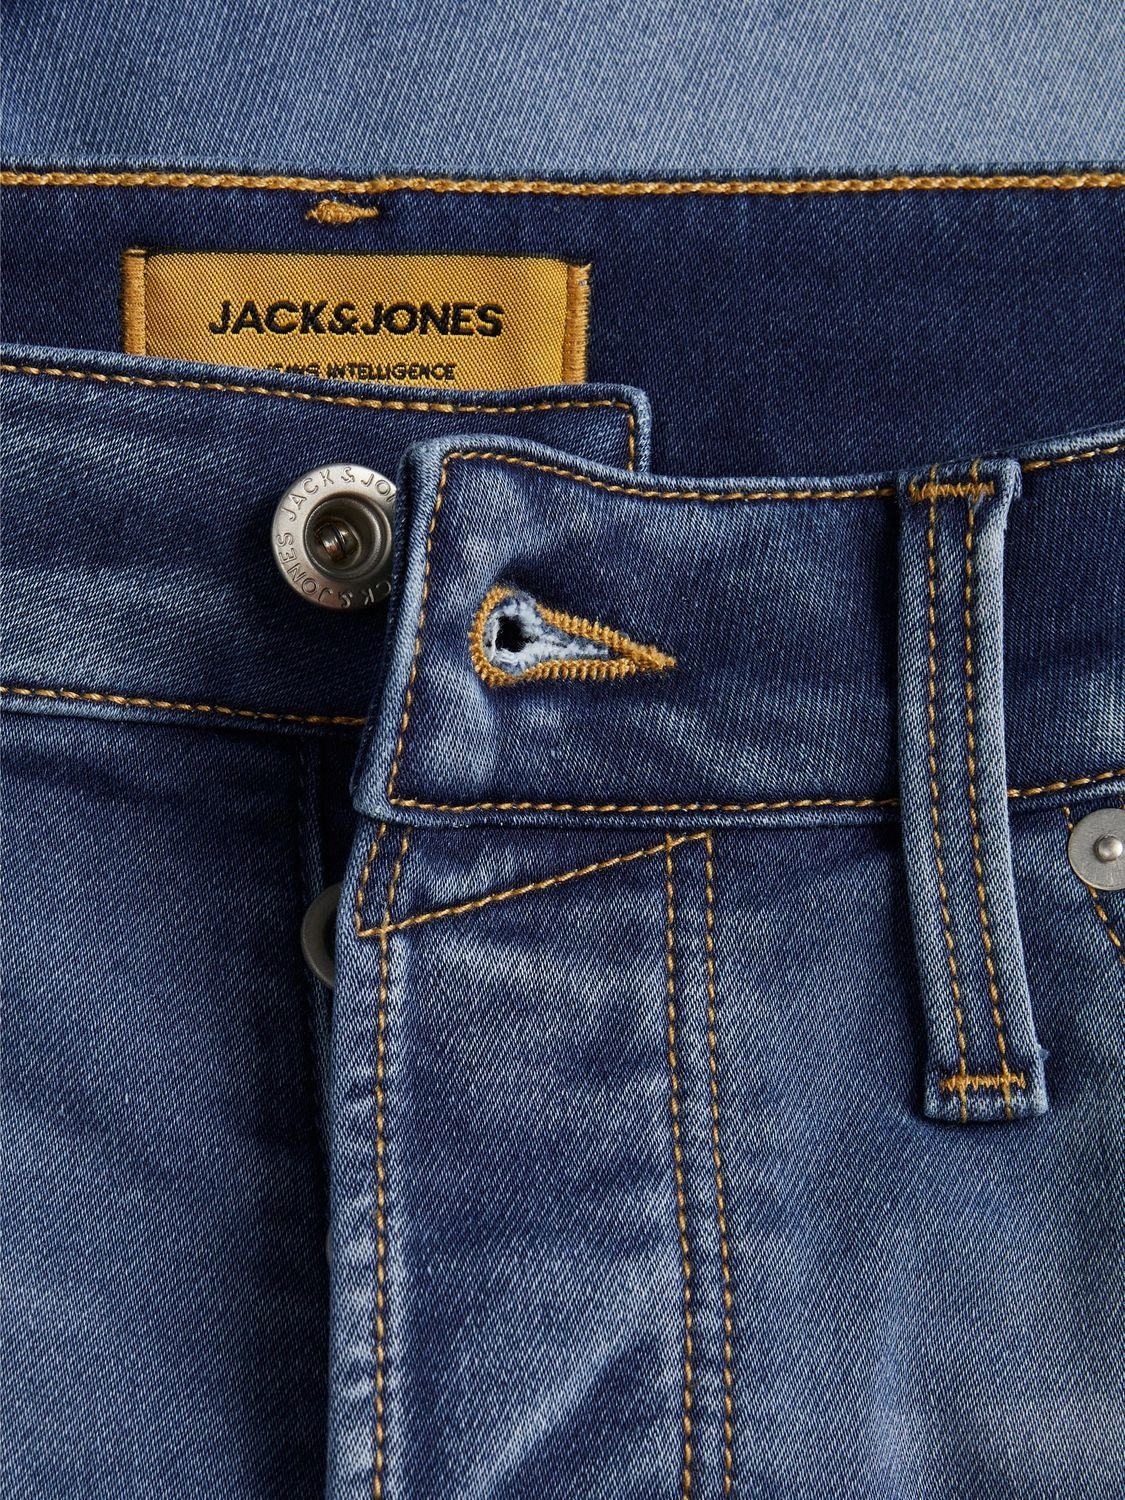 Jack & Jones Jeansshorts GE633 mit JJICON SHORTS 633 GE JJIRICK Stretch